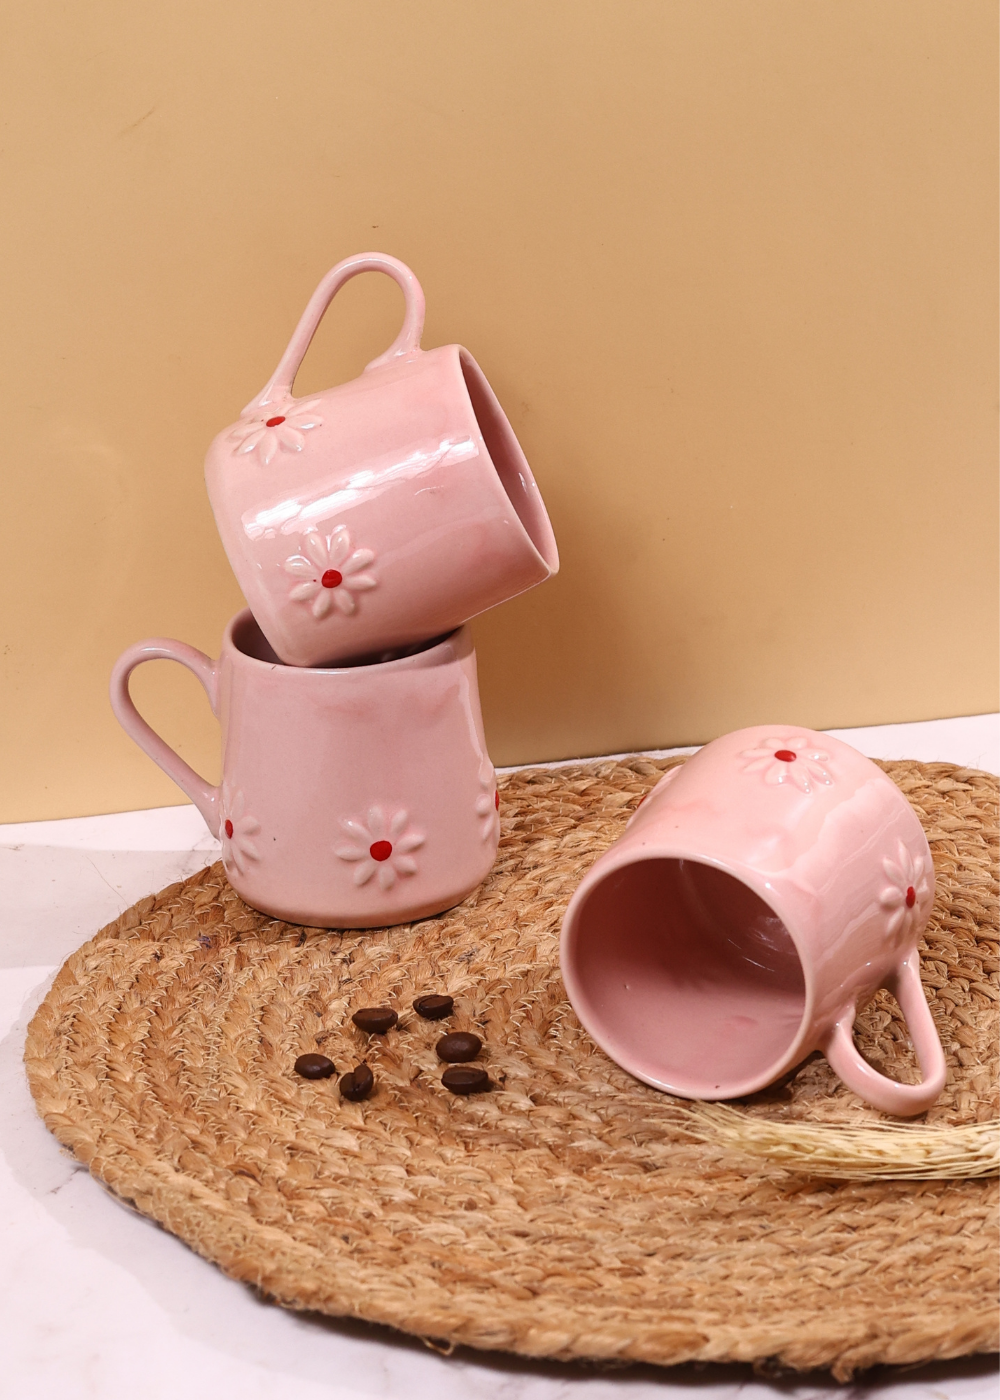 Handmade ceramic coffee mugs 